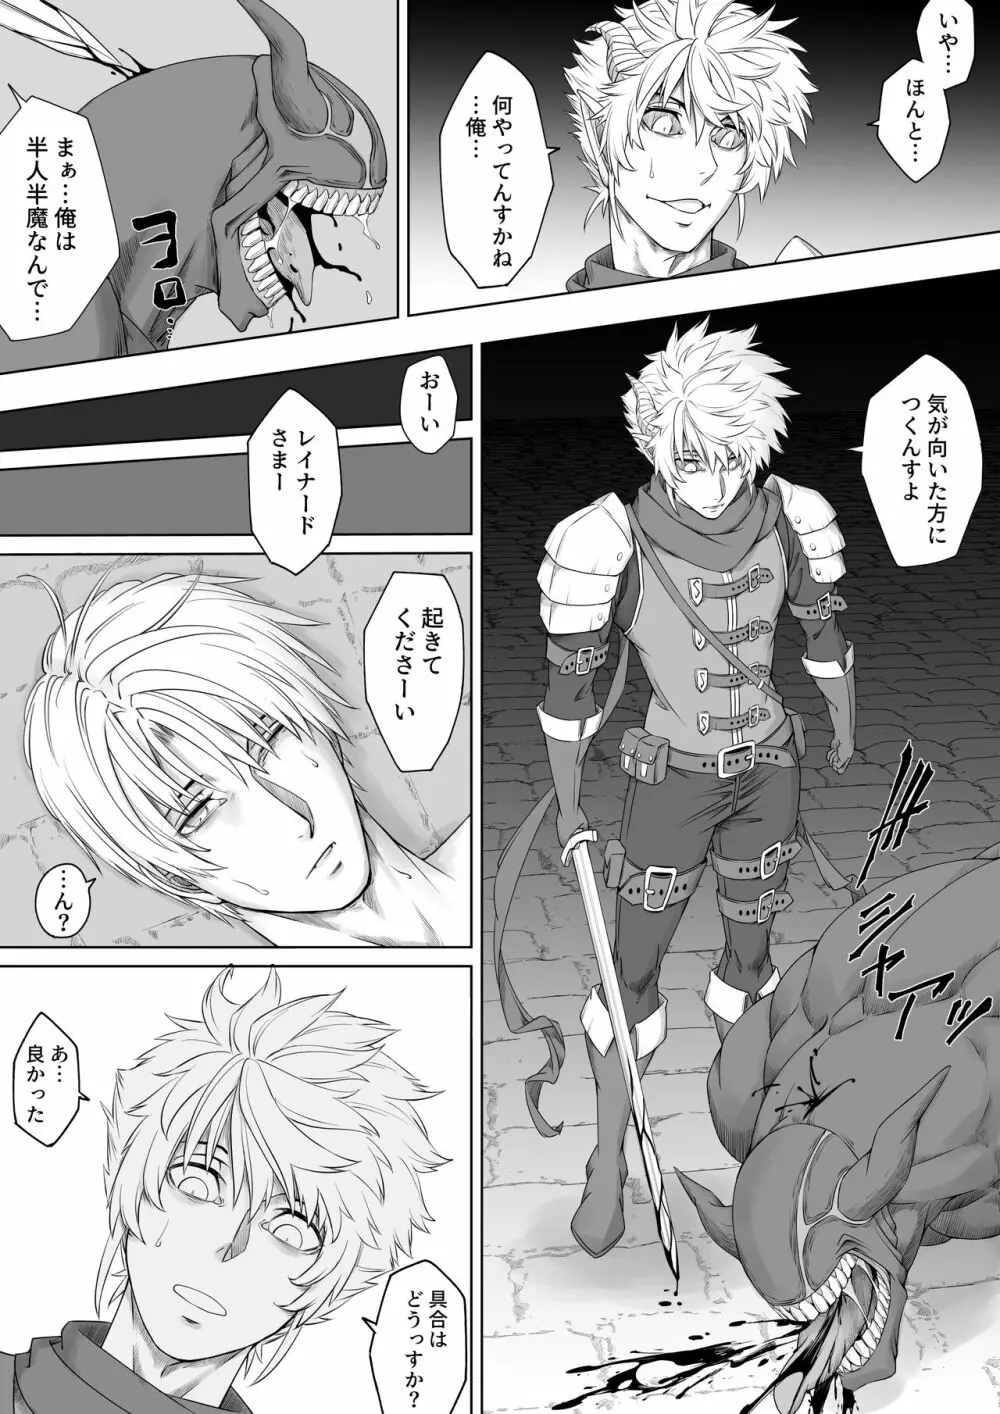 Knight of Labyrinth / ナイト オブ ラビリンス - page41